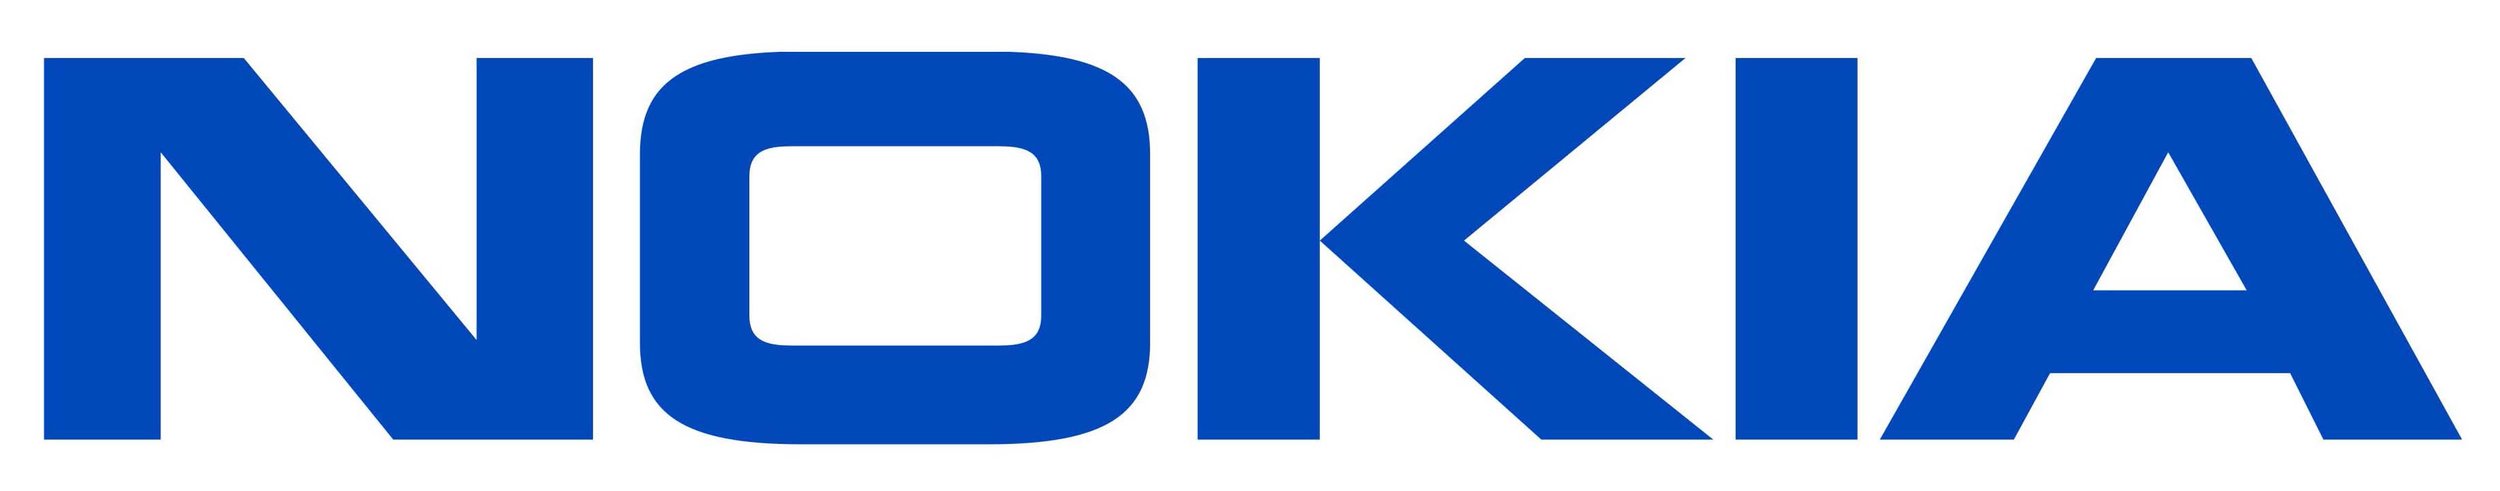 Nokia_logo-3.jpeg